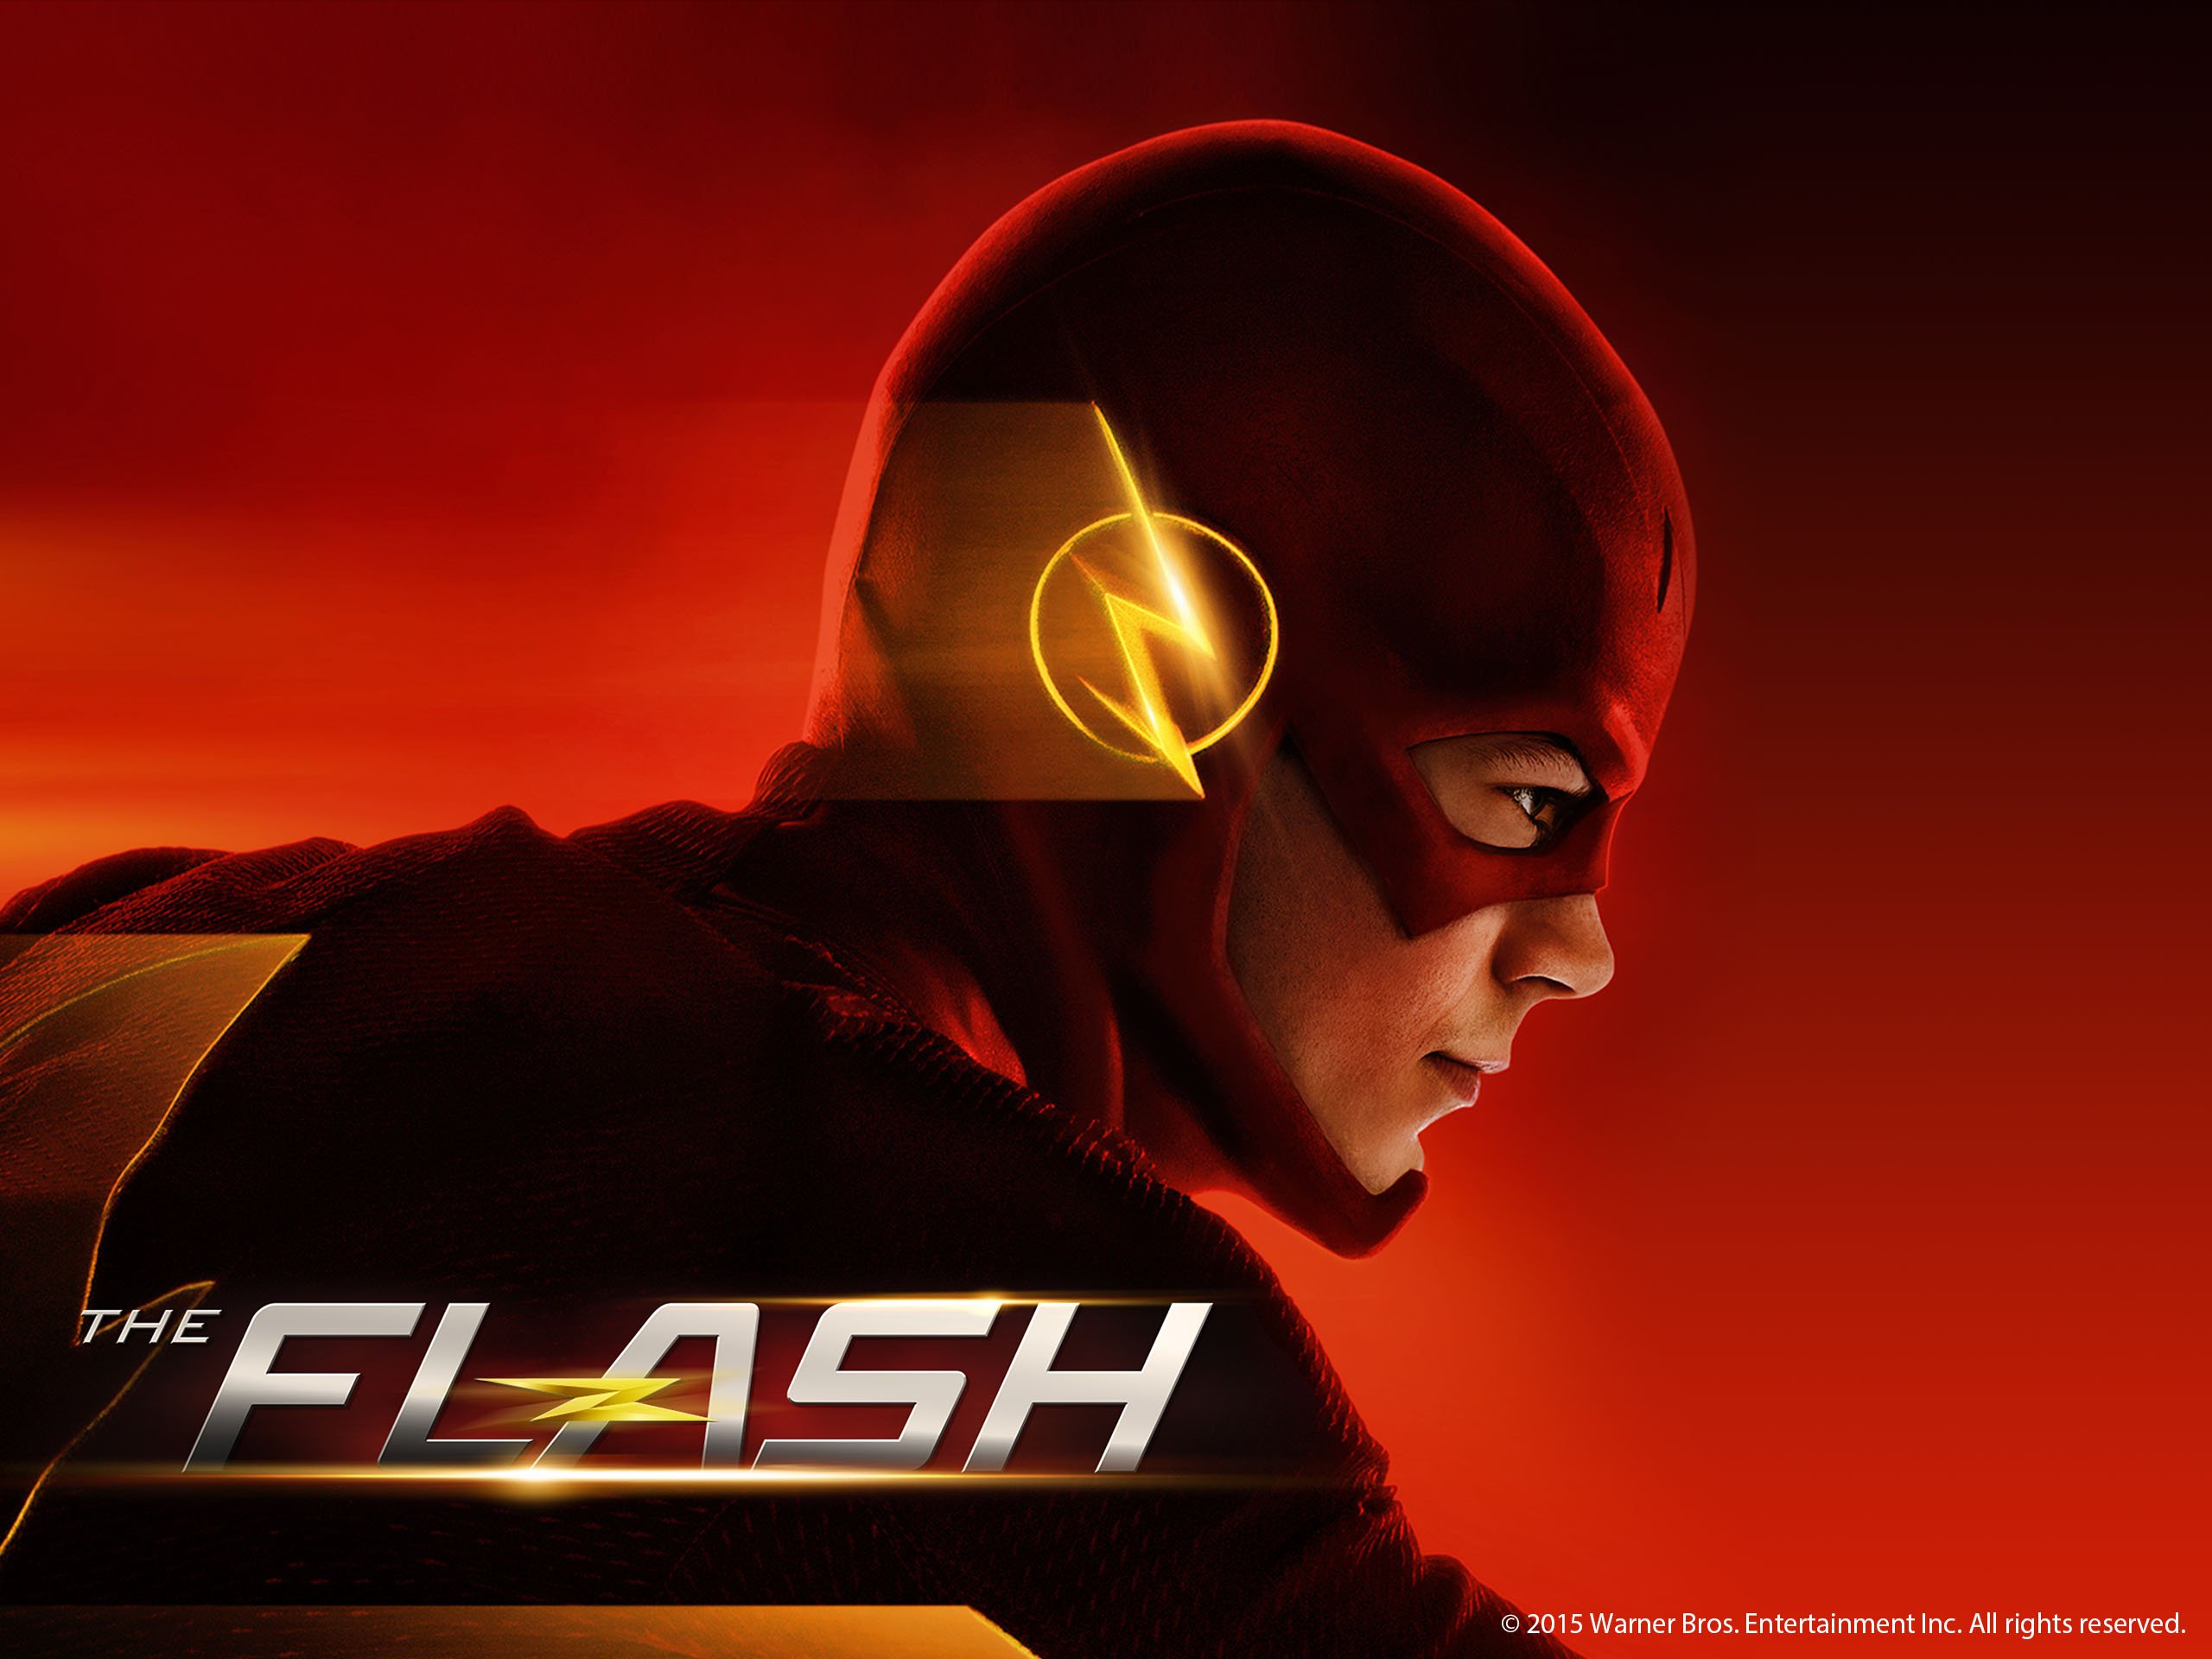 Amazon.com: The Flash: The Complete First Season: Grant Gustin ...